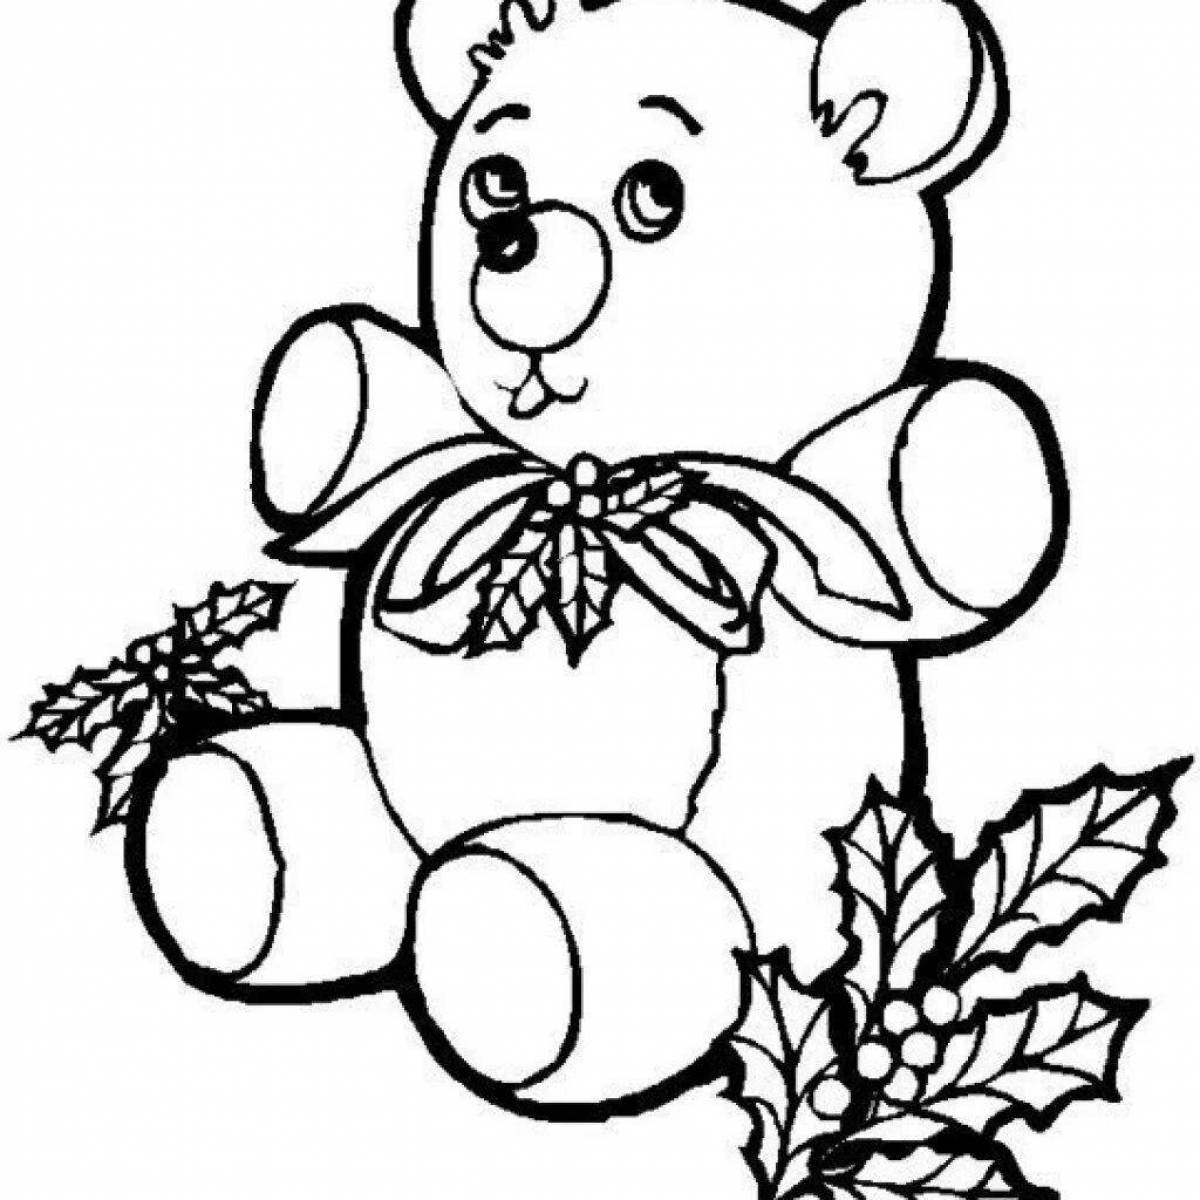 Adorable Christmas bear coloring page